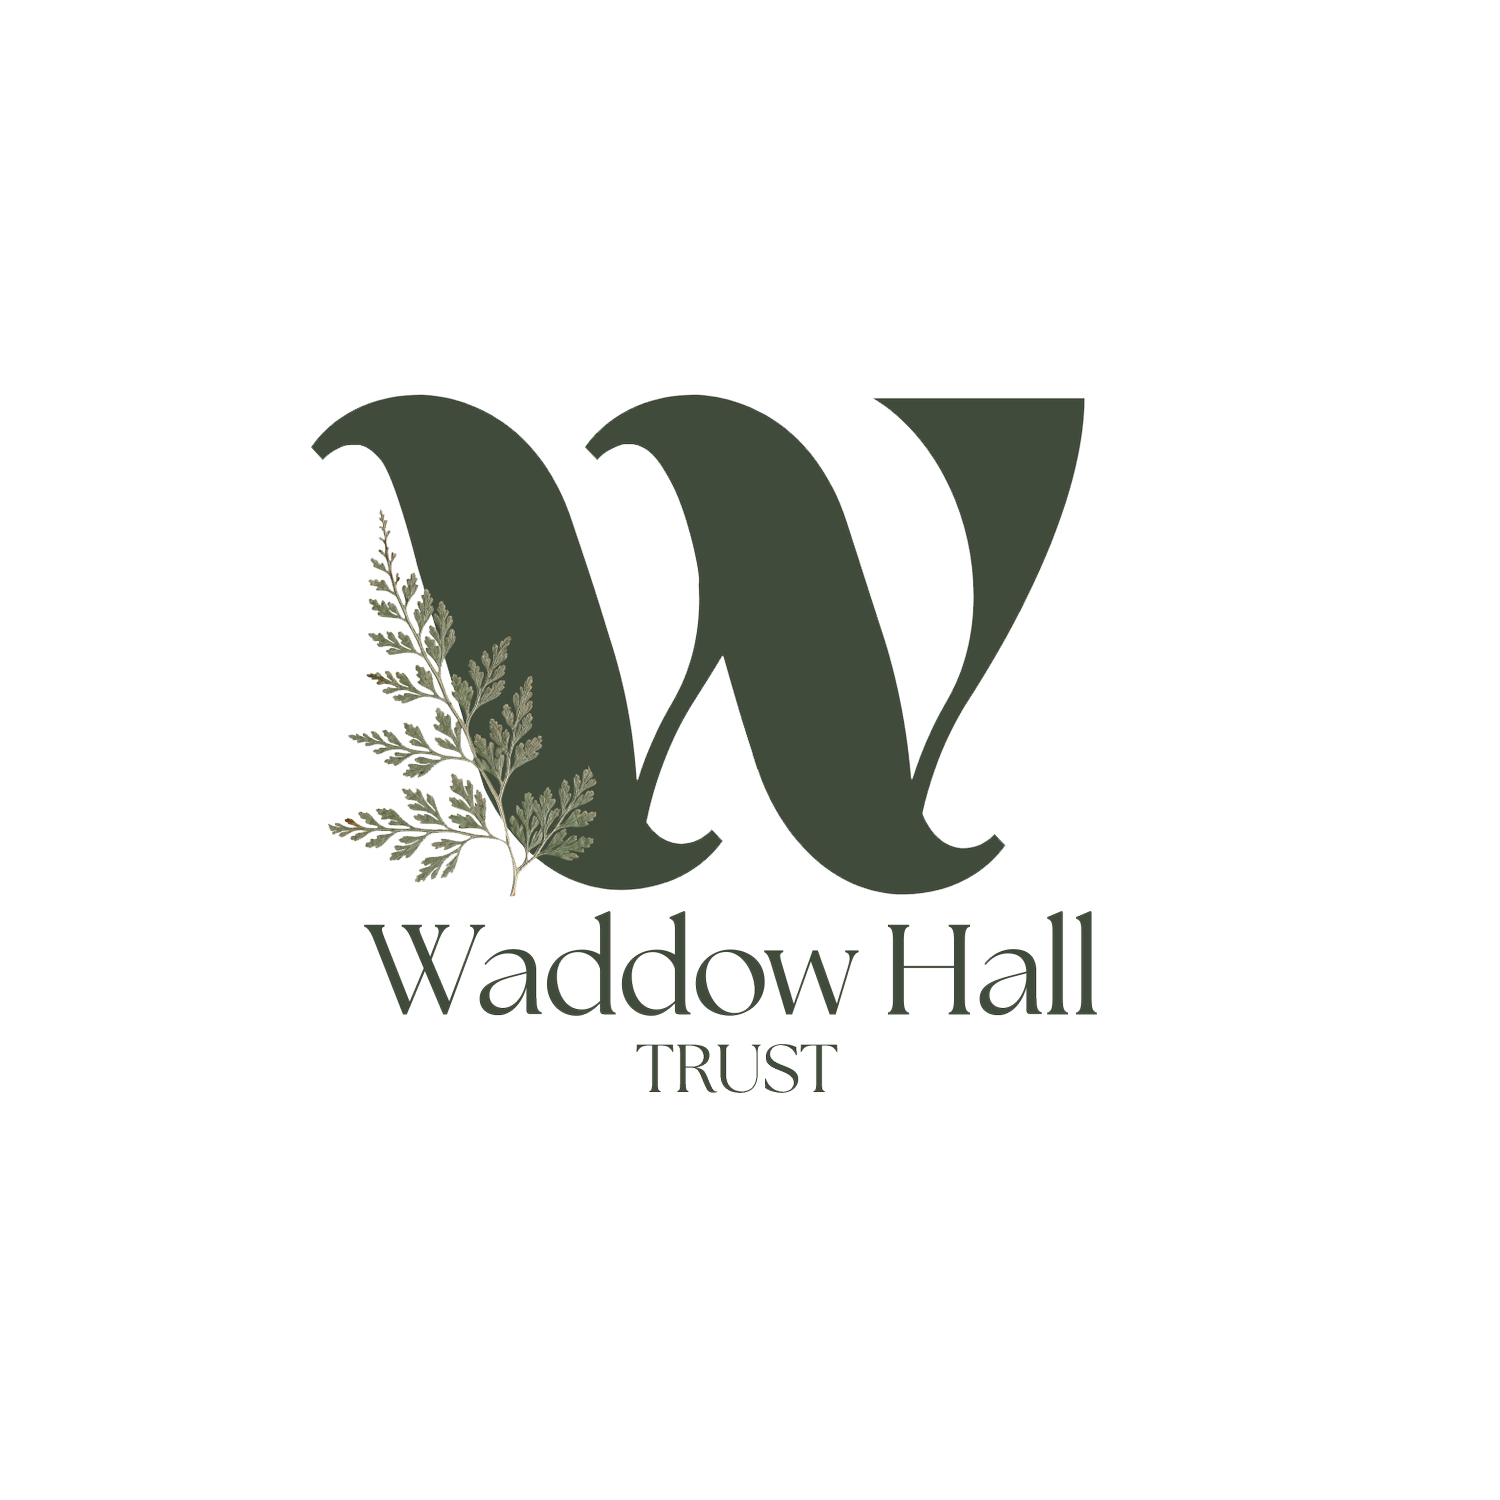 Waddow Hall Trust